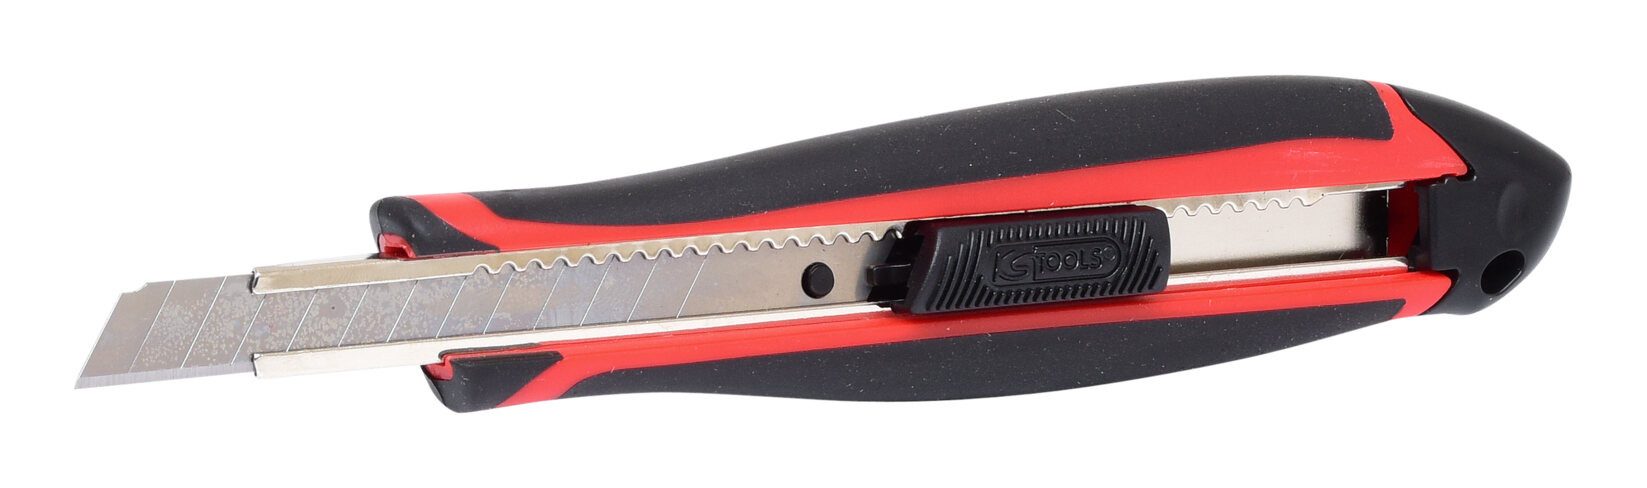 KS Tools Cuttermesser, Klinge: 0.04 cm, Universal-Abbrechklingen 9 mm